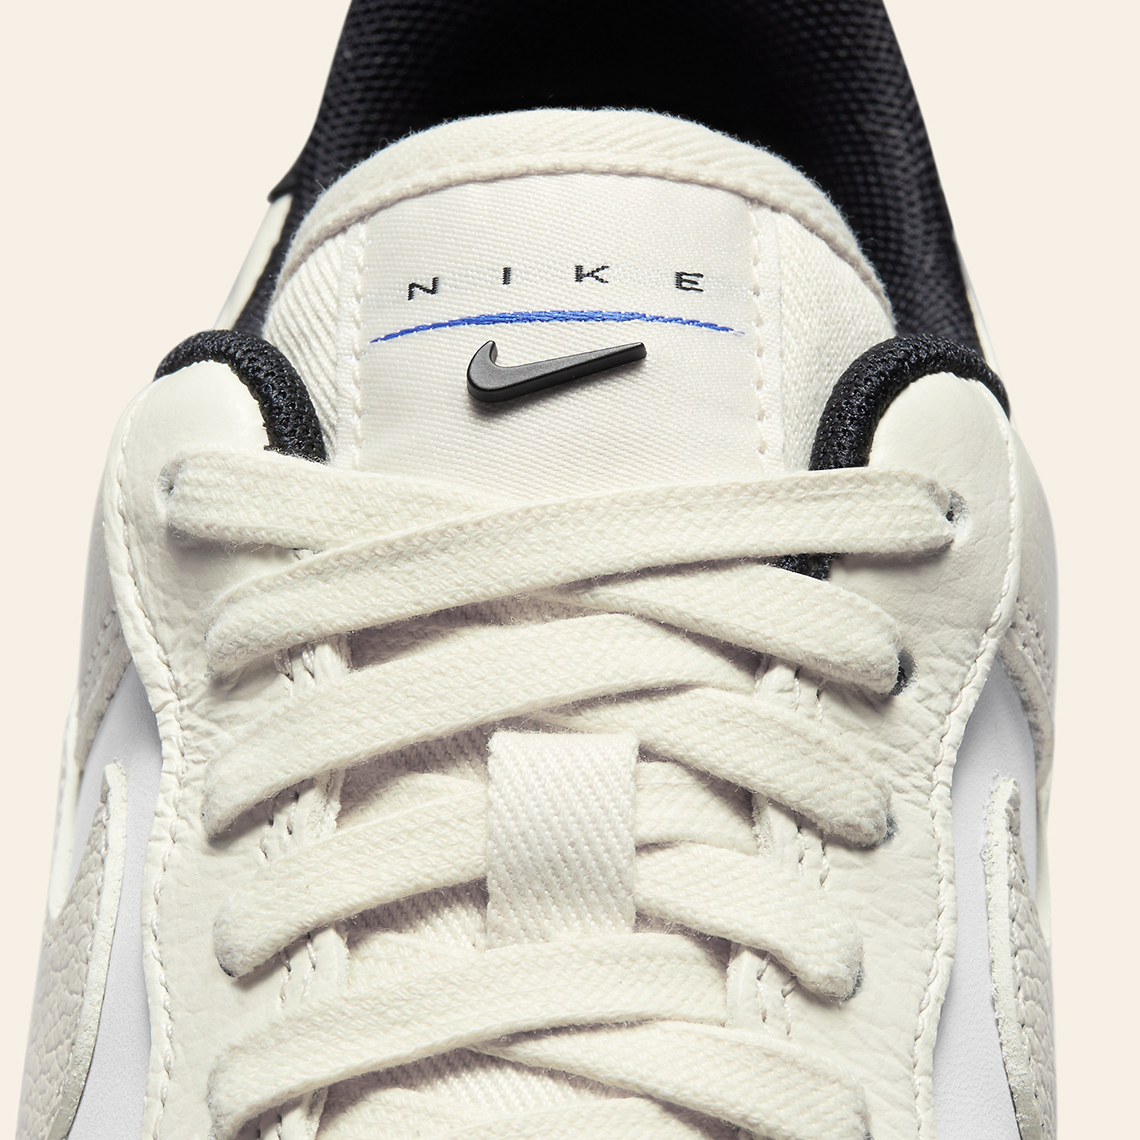 Sneakers Release – Nike Air Force 1 Low PRM “Black